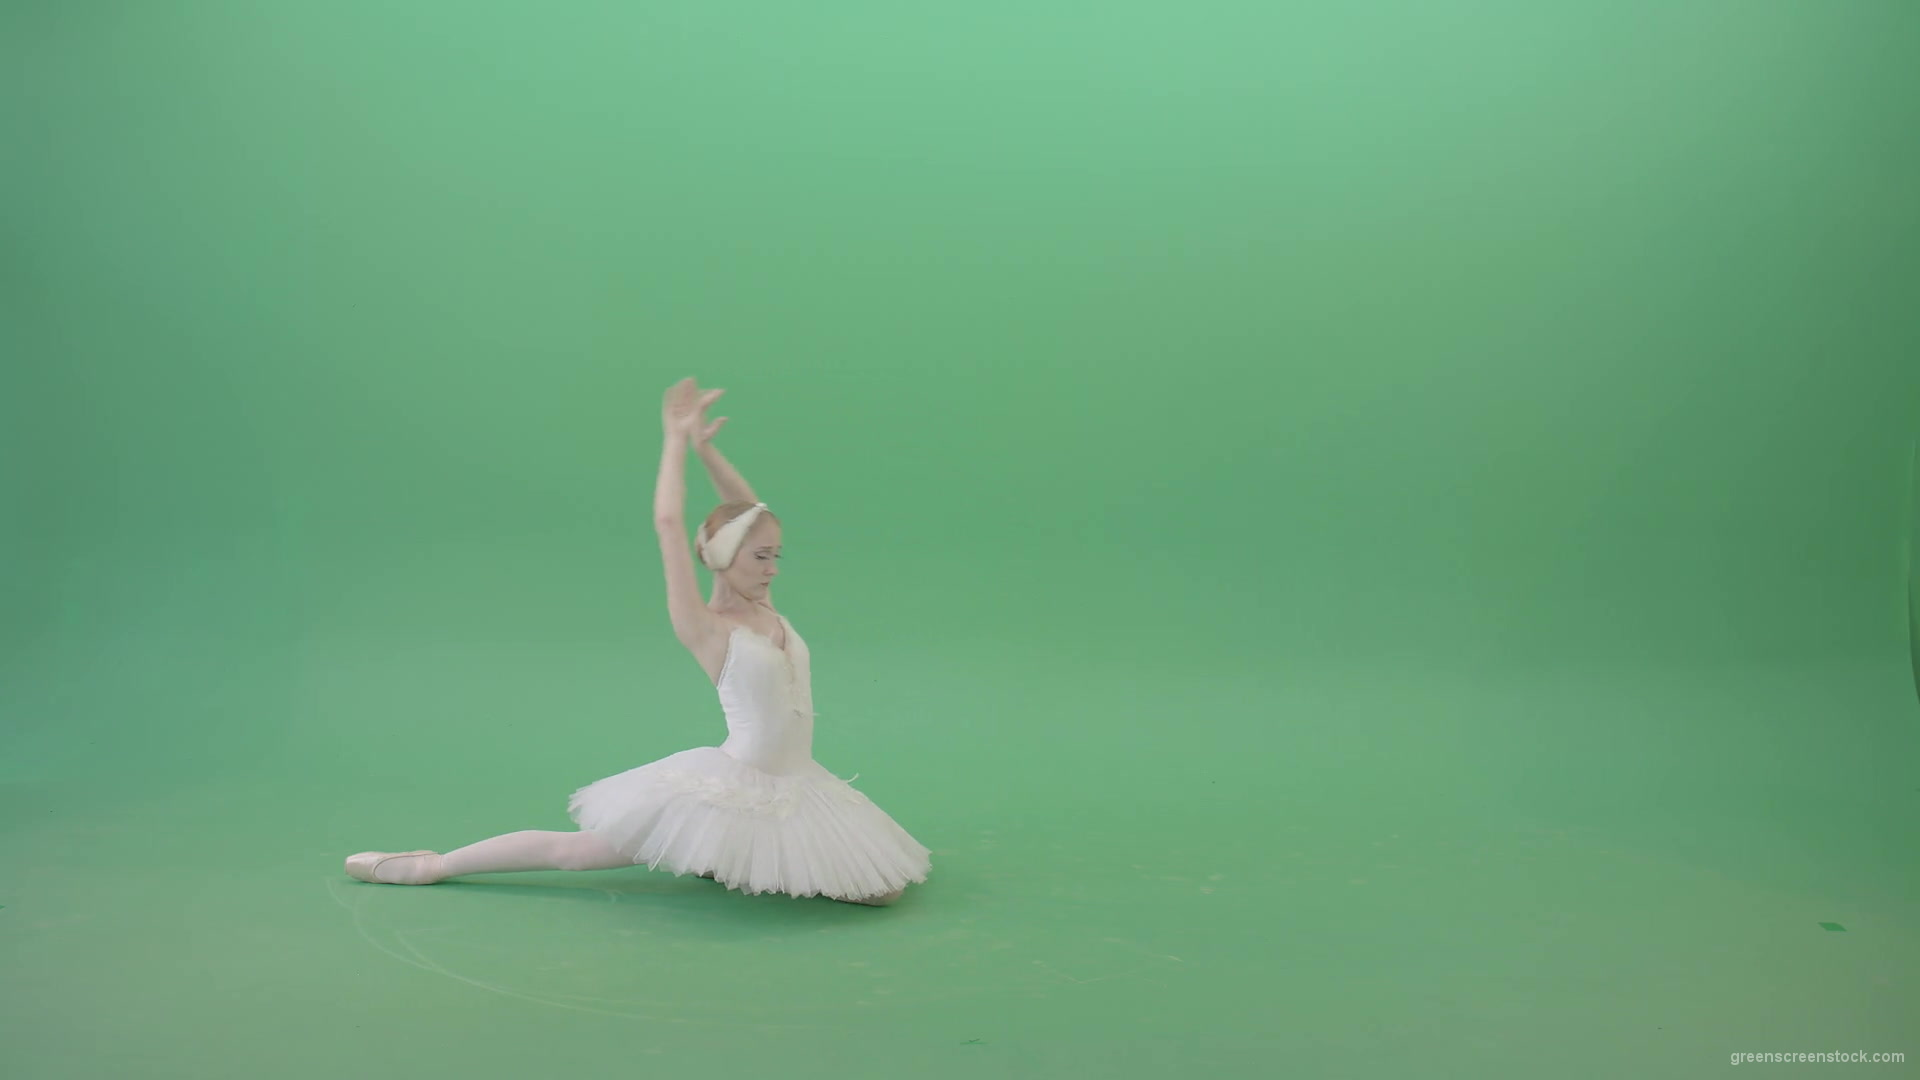 Flying-swan-laken-ballerina-dancing-with-light-on-green-screen-chroma-key-4K-Video-Footage-1920_008 Green Screen Stock